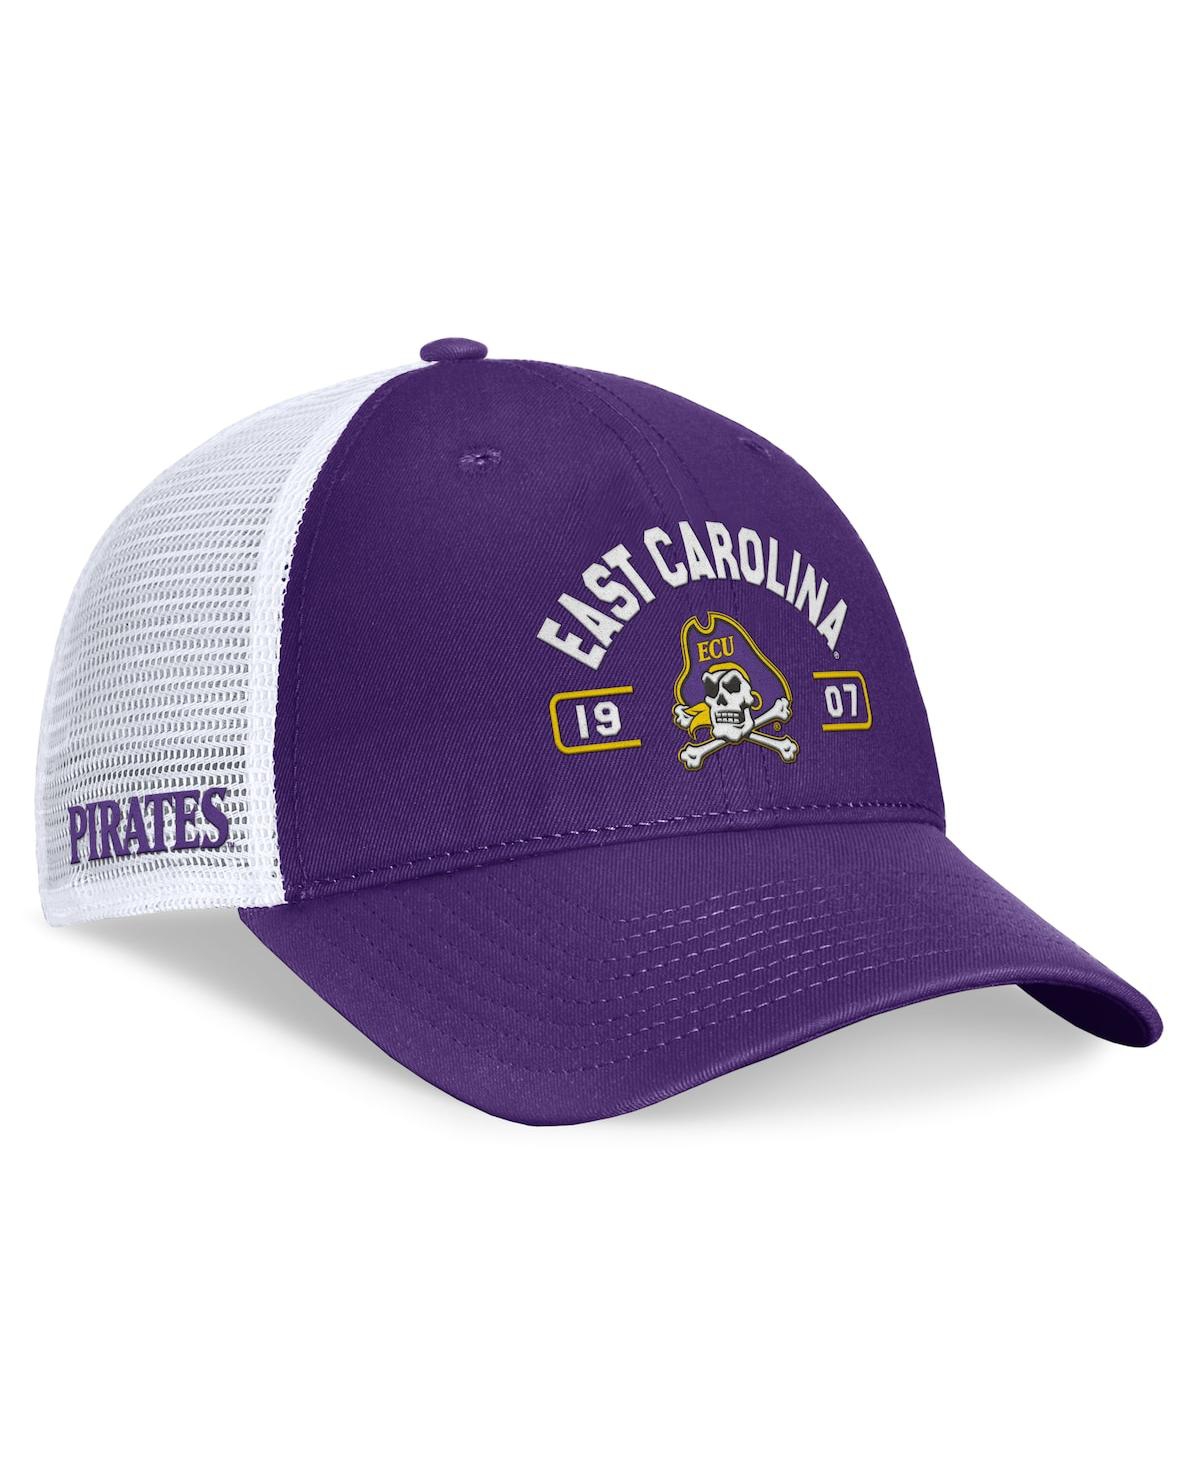 Men's / Ecu Pirates Free Kick Trucker Adjustable Hat - Purple, White